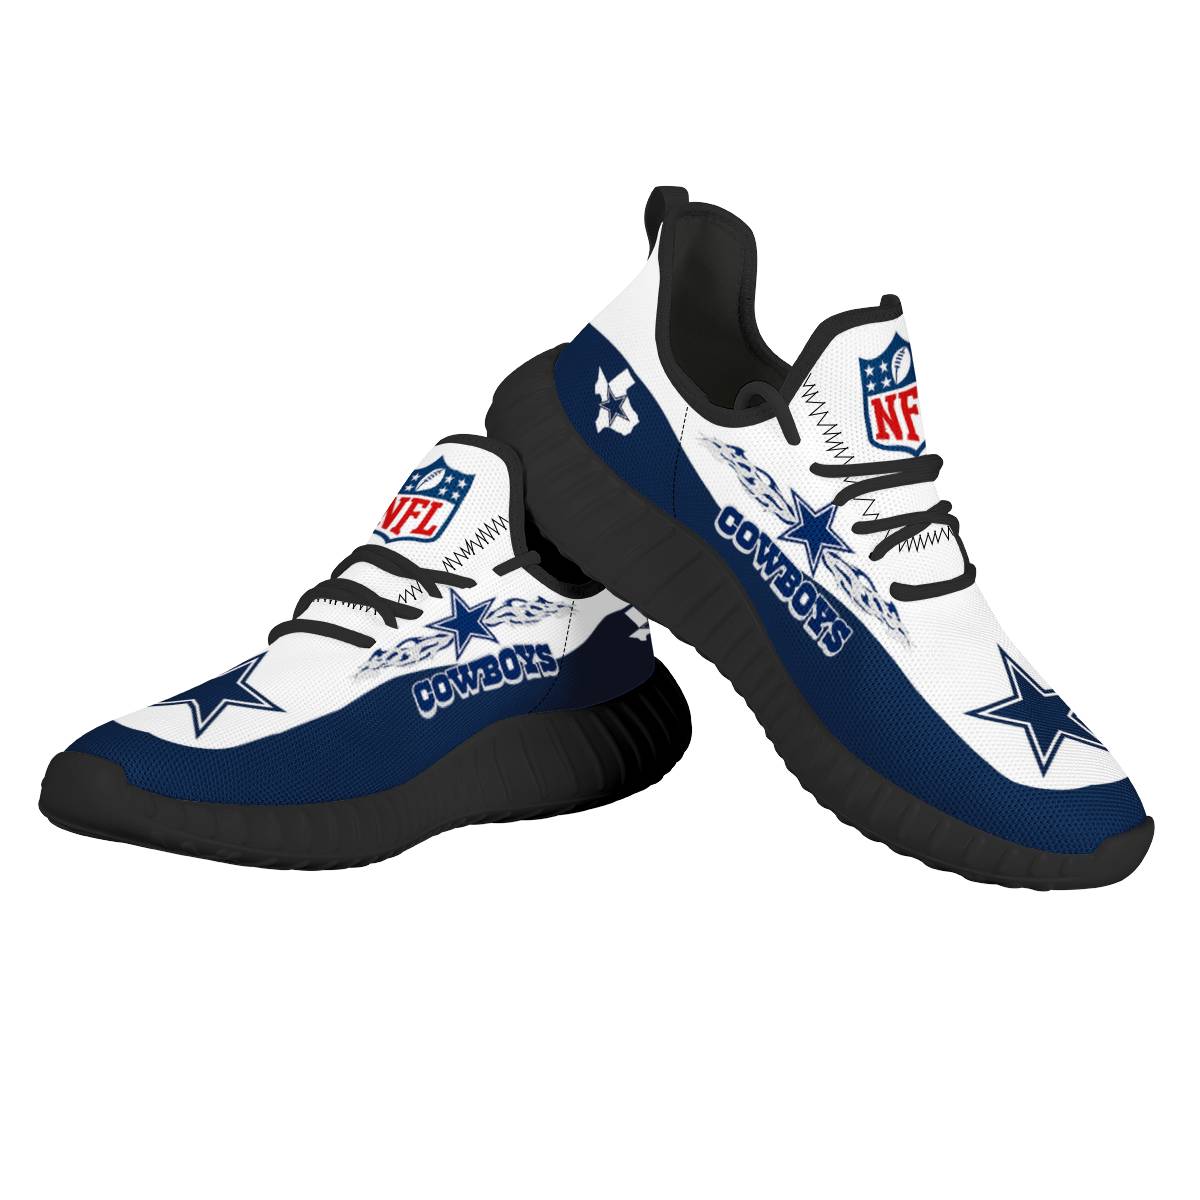 Men's NFL Dallas Cowboys Lightweight Running Shoes 006